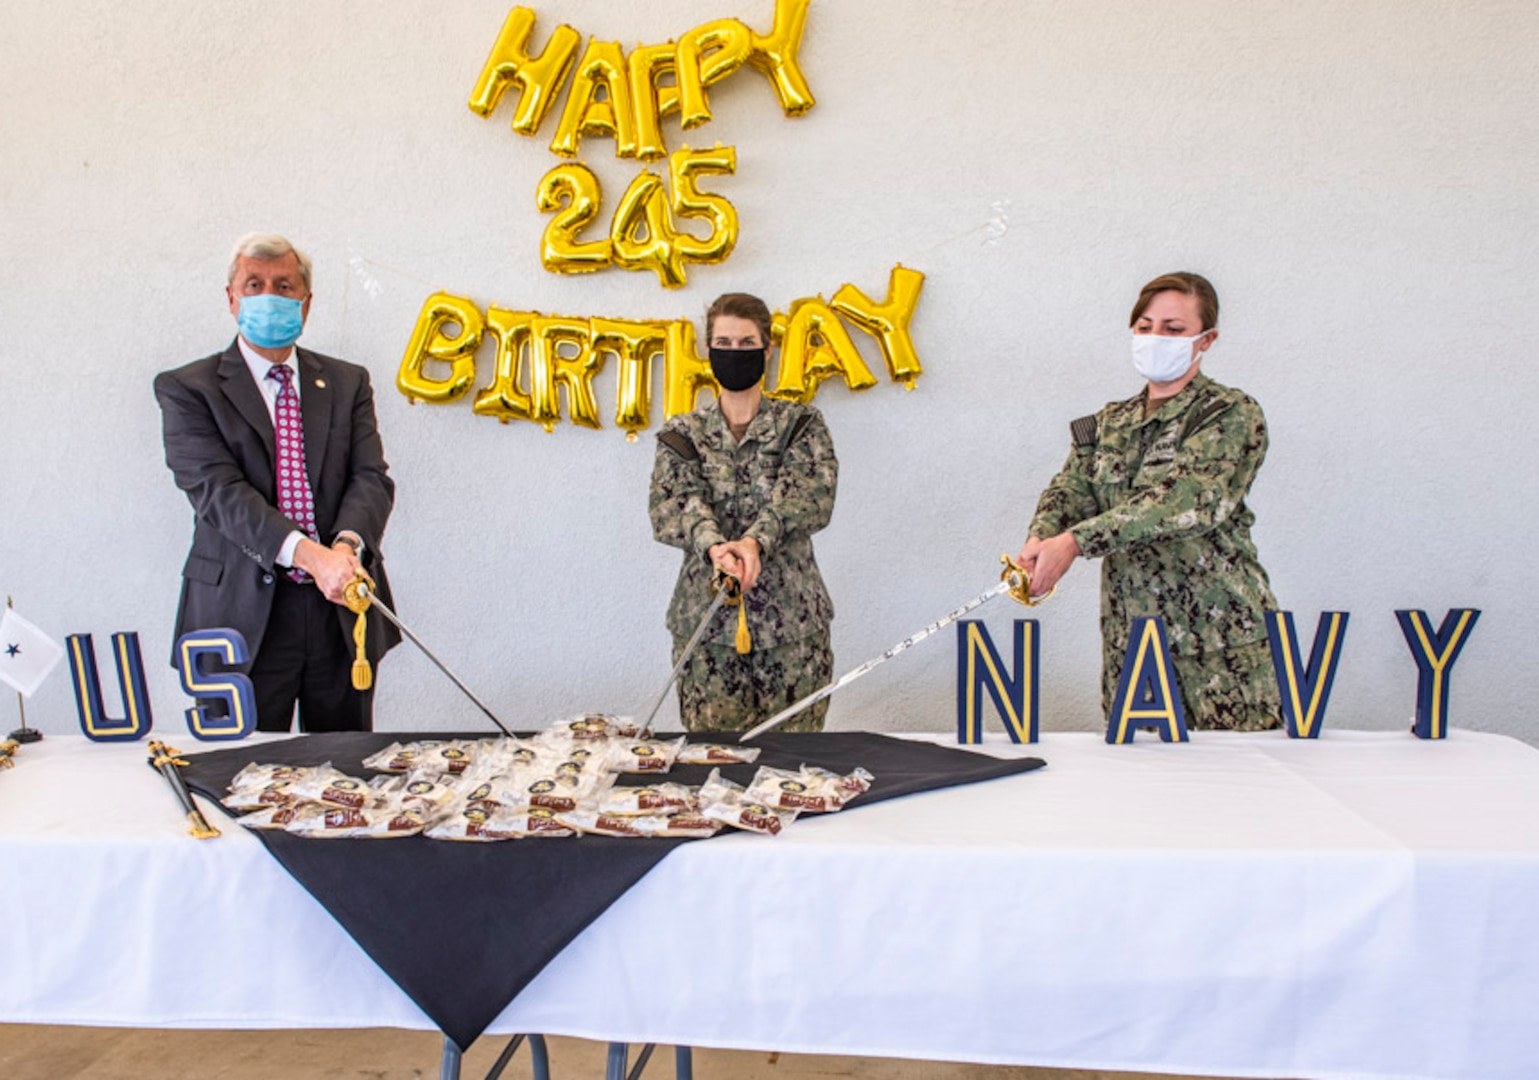 Navy birthday cake cutting